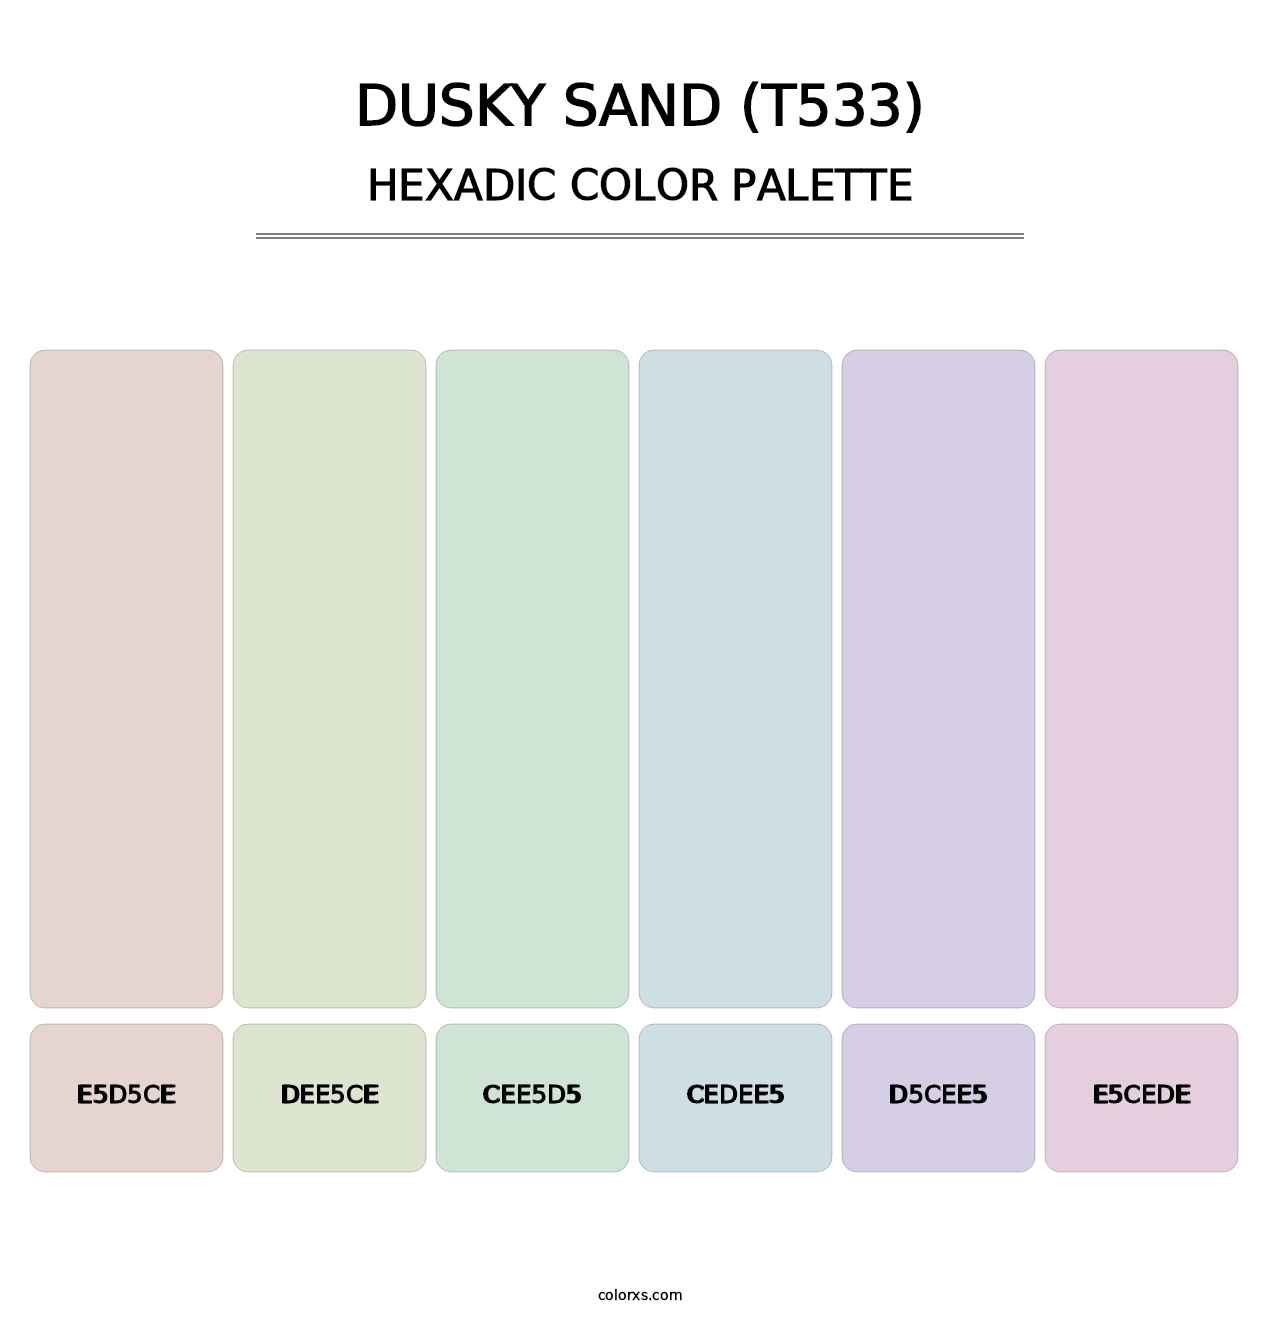 Dusky Sand (T533) - Hexadic Color Palette